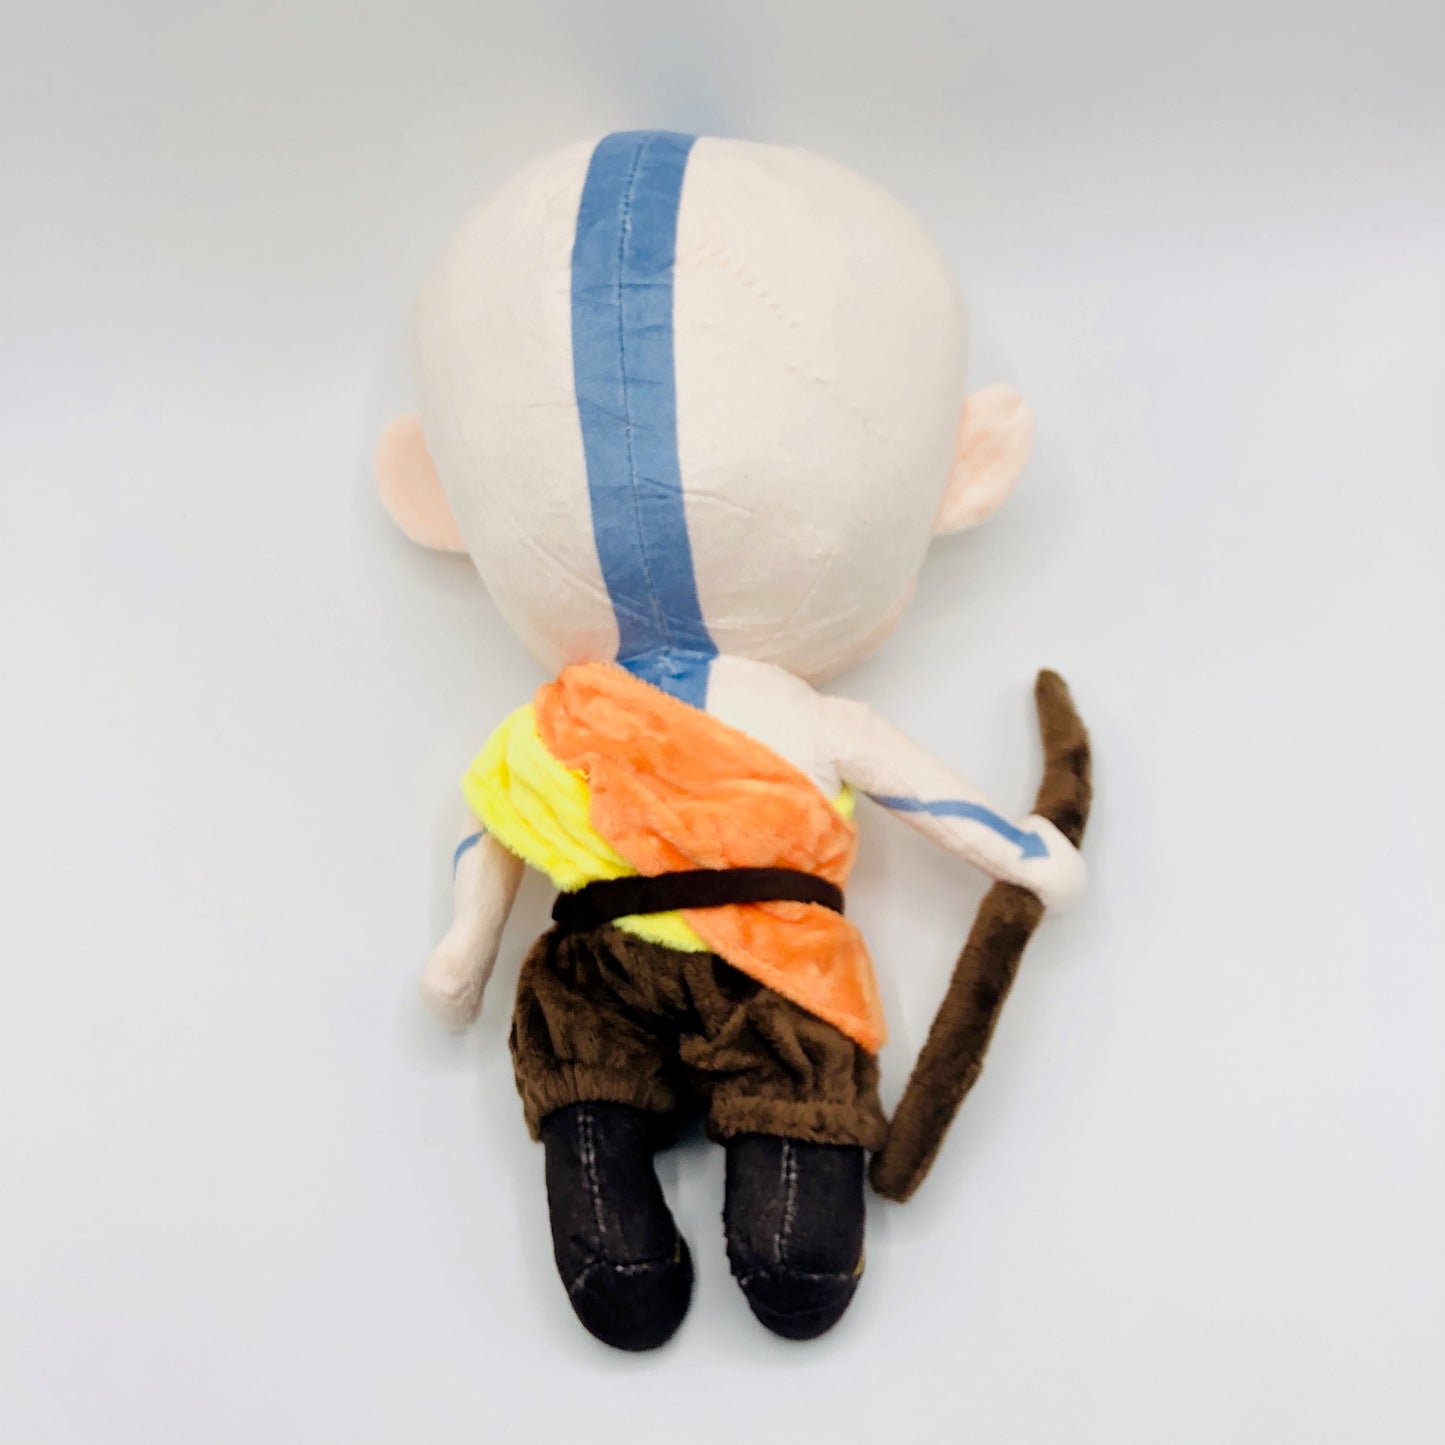 New The Last Airbender Aang Plush Avatar Stuffed Animal Doll Toy - Toyslando